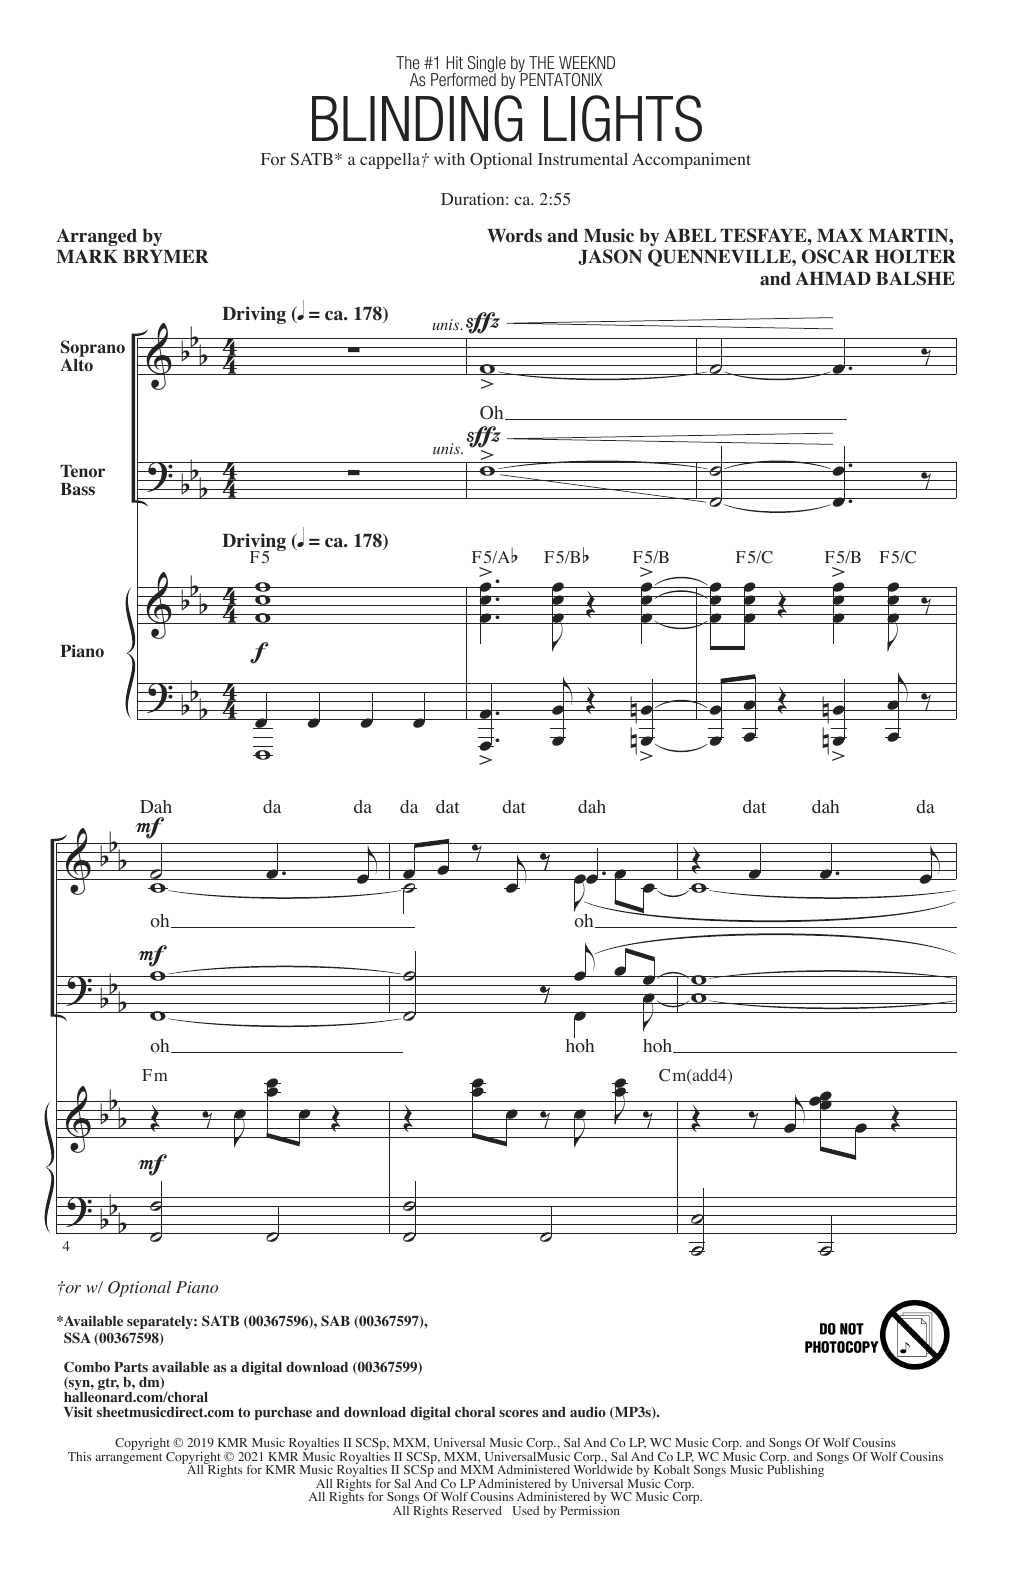 Pentatonix Blinding Lights (arr. Mark Brymer) sheet music notes and chords arranged for SSA Choir